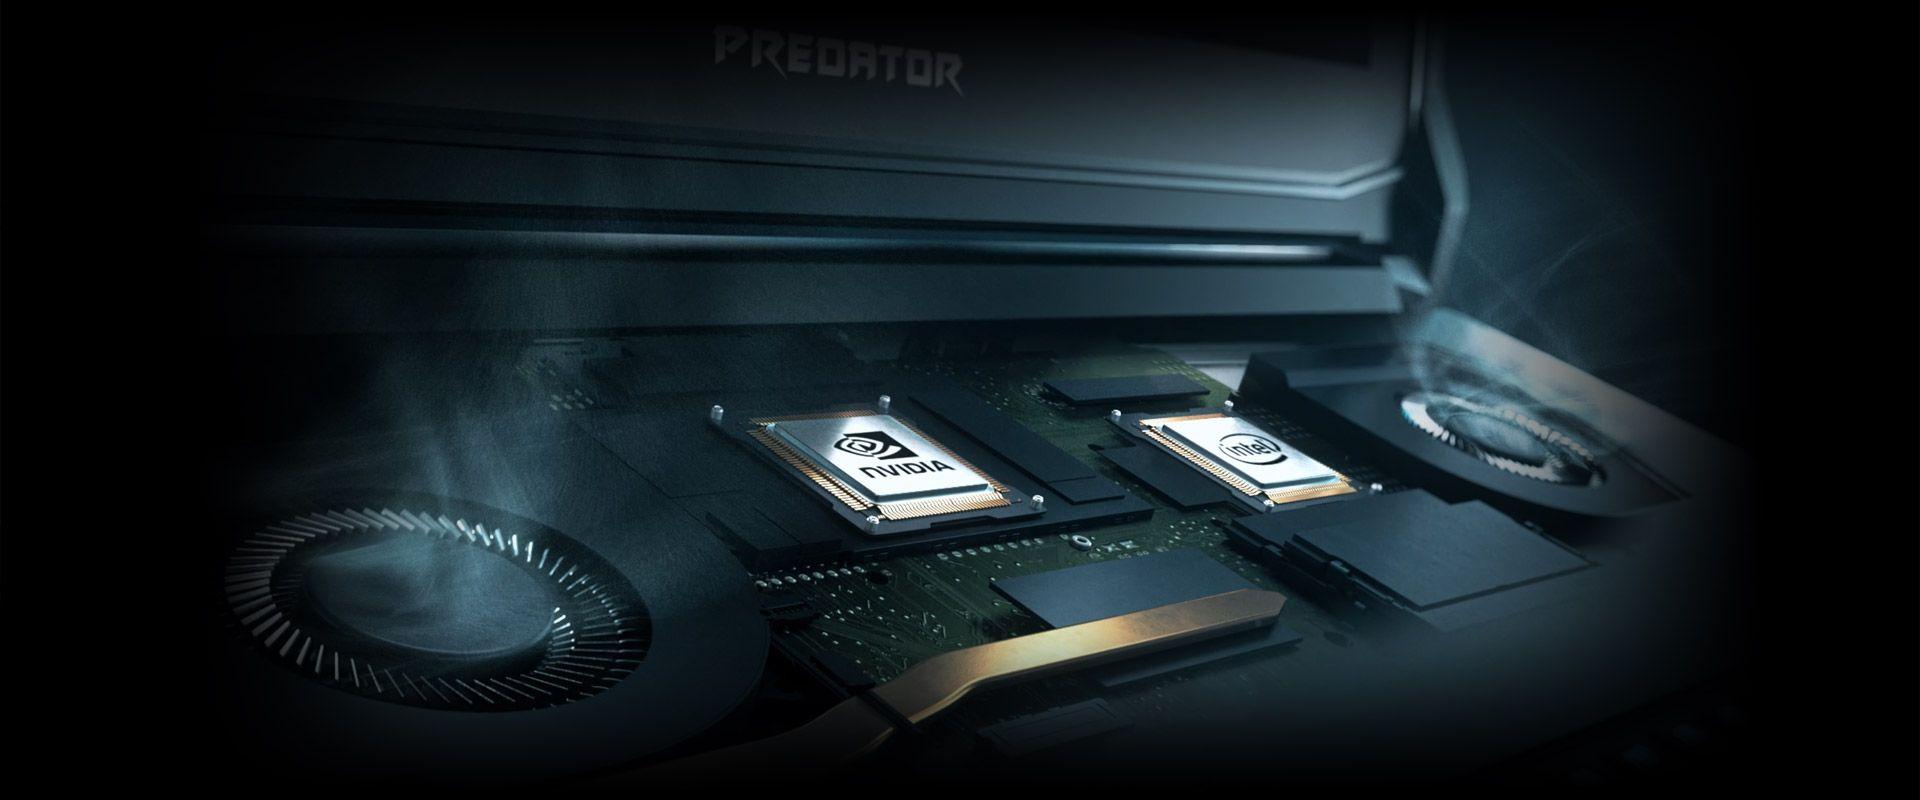 Acer 4K Predator Wallpapers - Top Free Acer 4K Predator Backgrounds ...